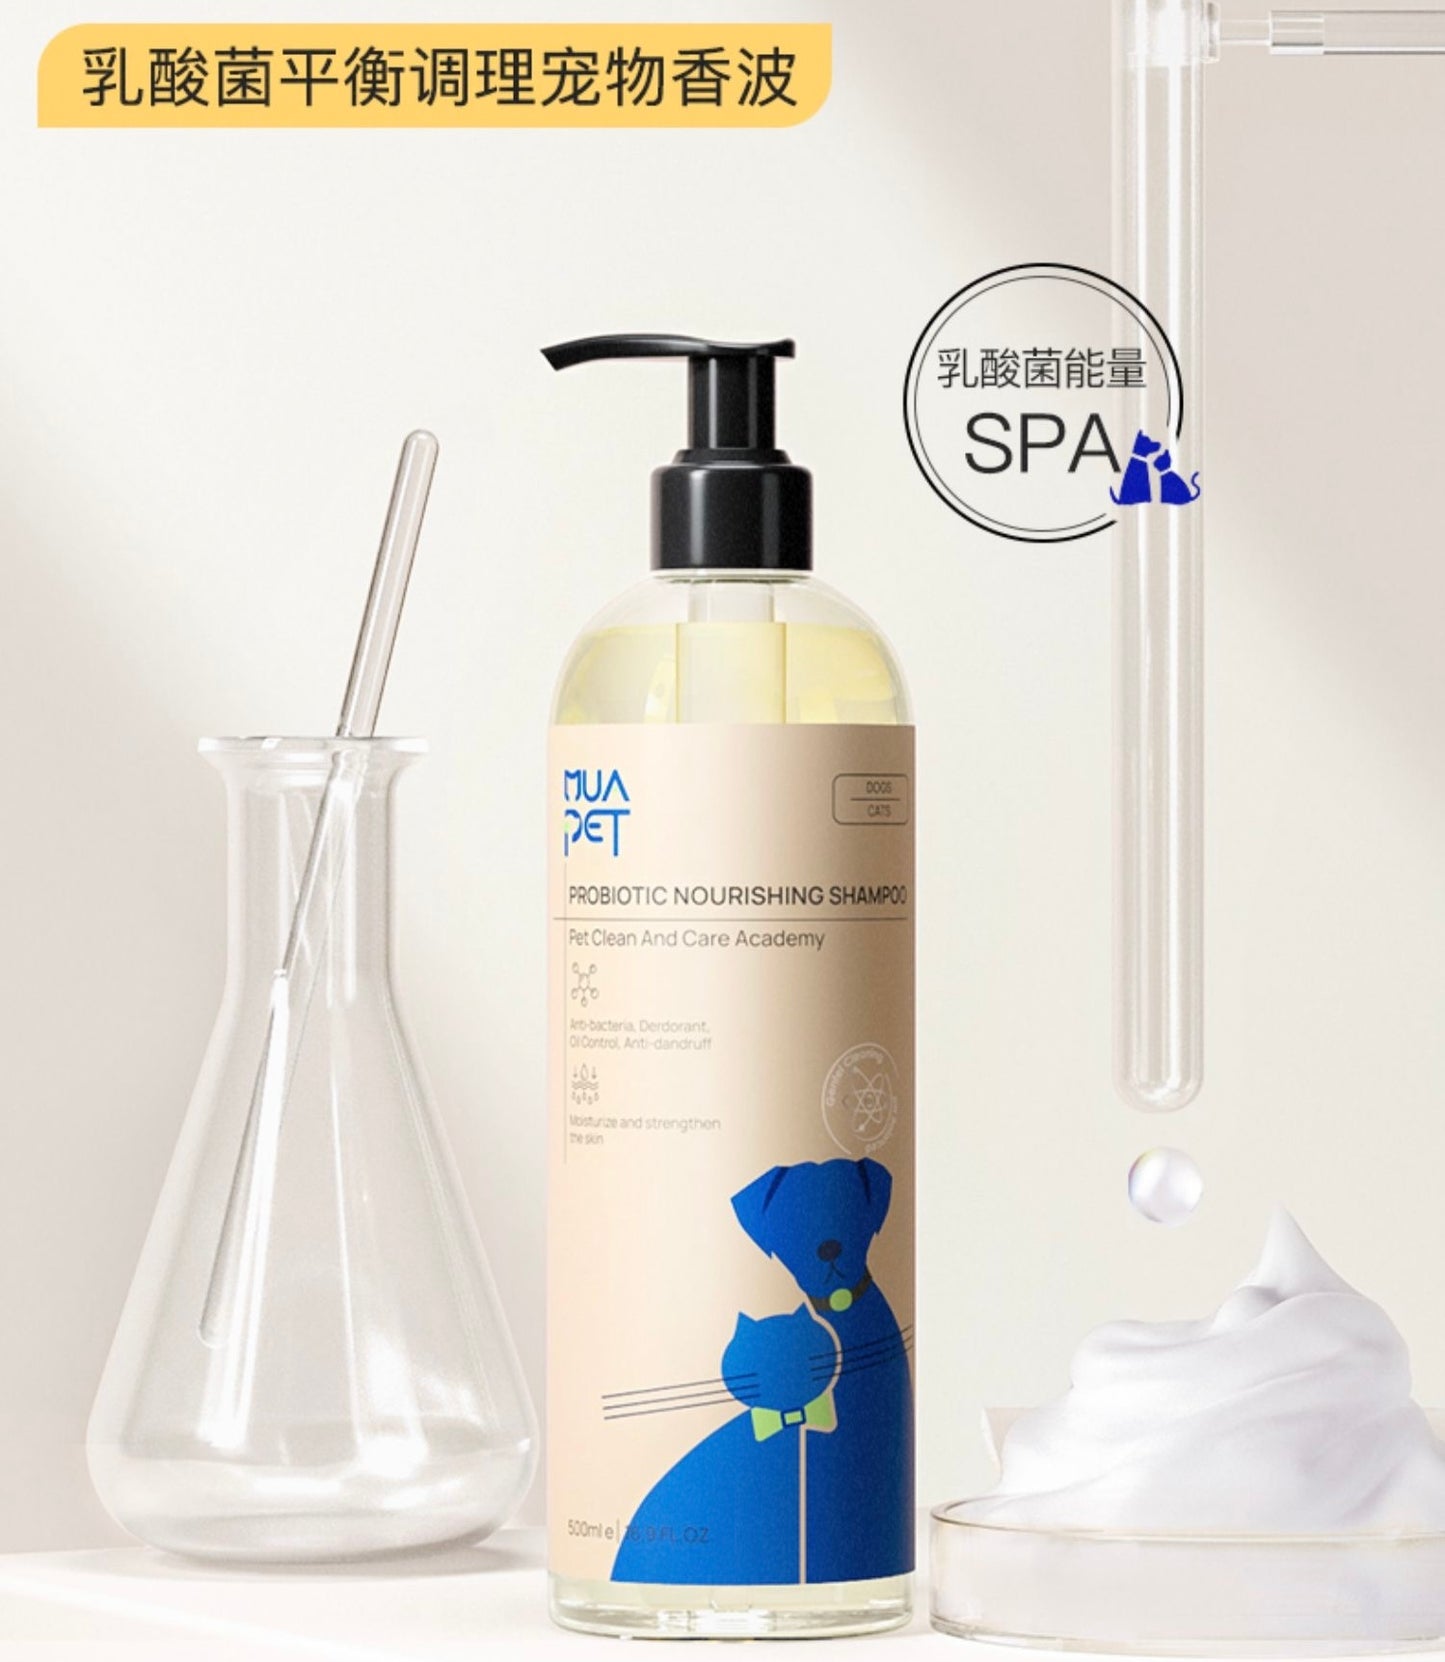 PT MuaPet Probiotic Nourishing Shampoo